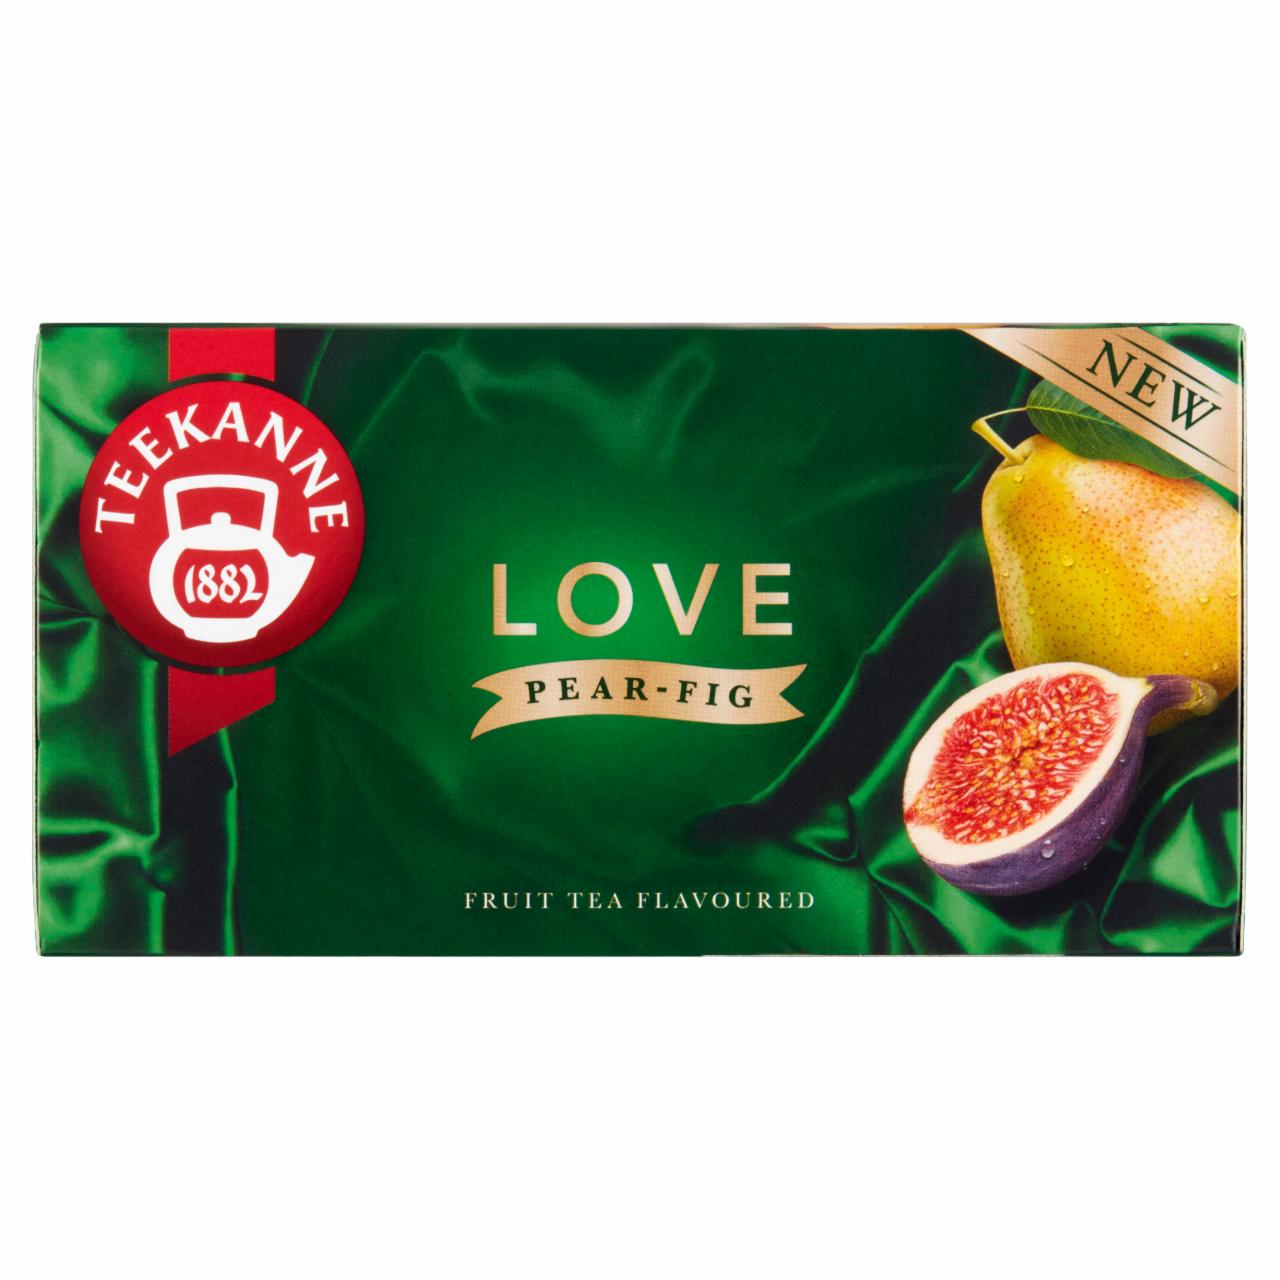 Zdjęcia - Teekanne Love Pear-Fig Aromatyzowana mieszanka herbatek 40 g (20 x 2,0 g)